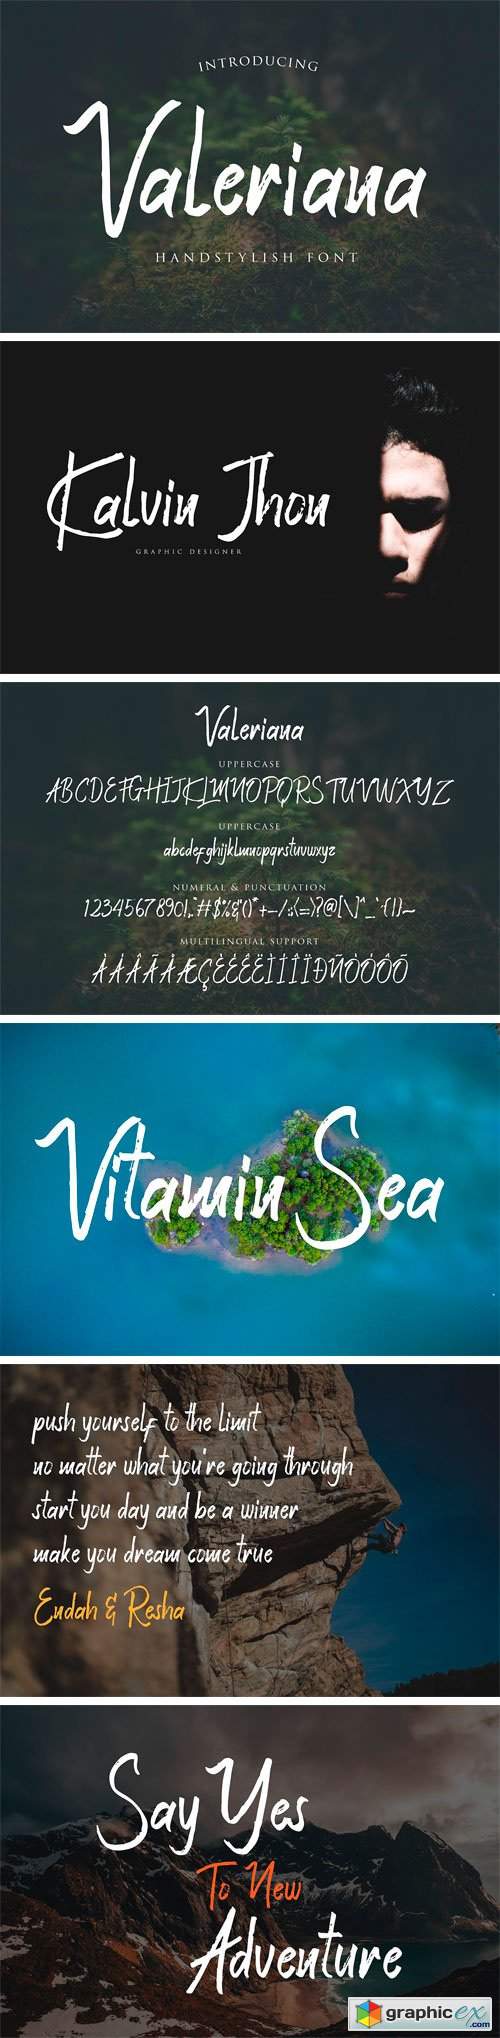 Valeriana Handstylish Font